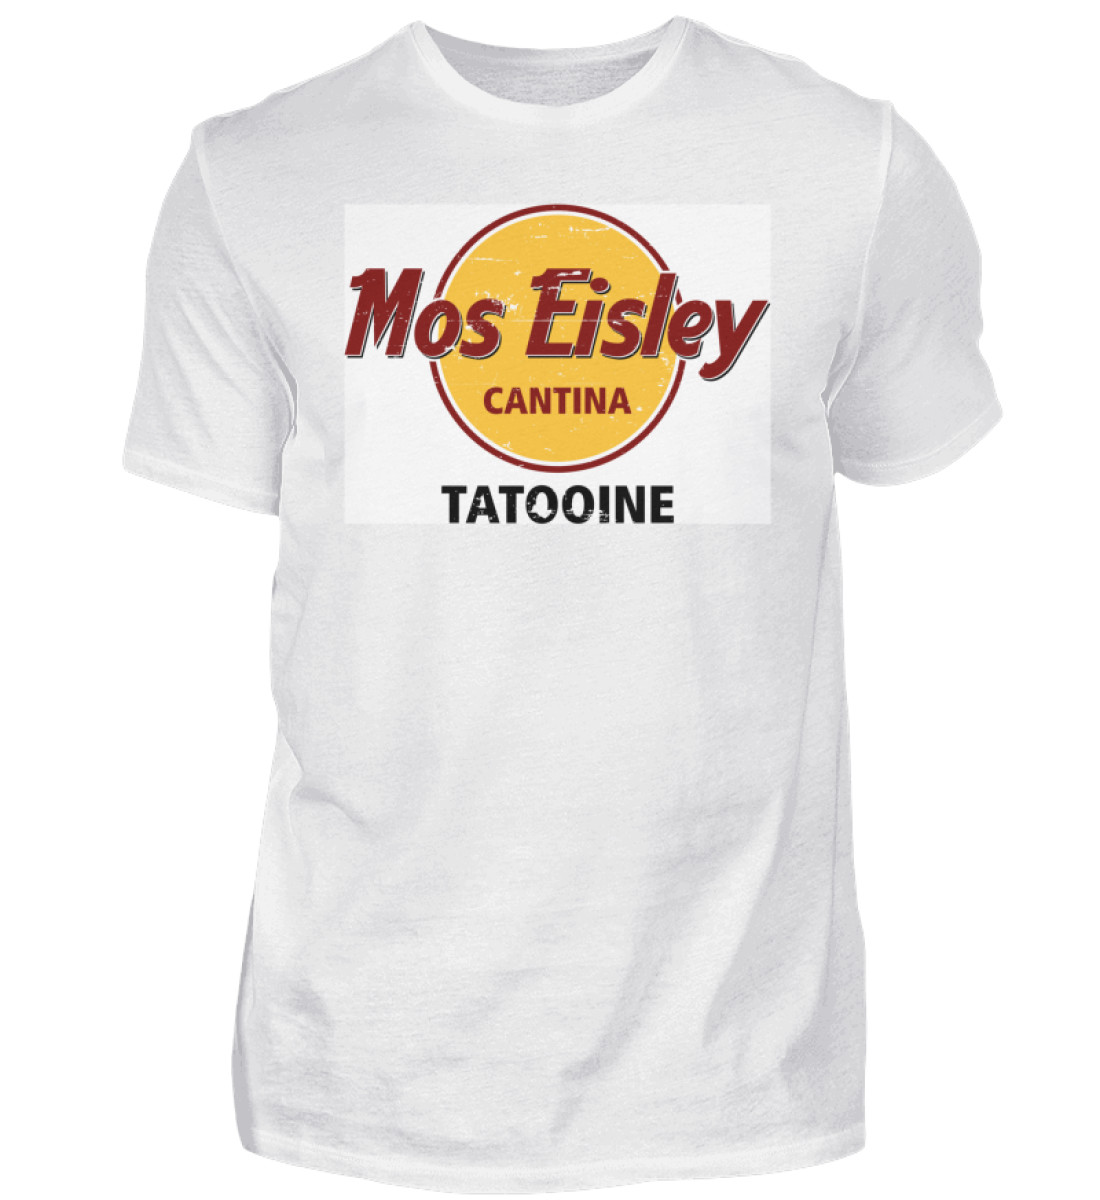 T-Shirt "Mos Eisley Cantina", grunge - Herren Shirt-3